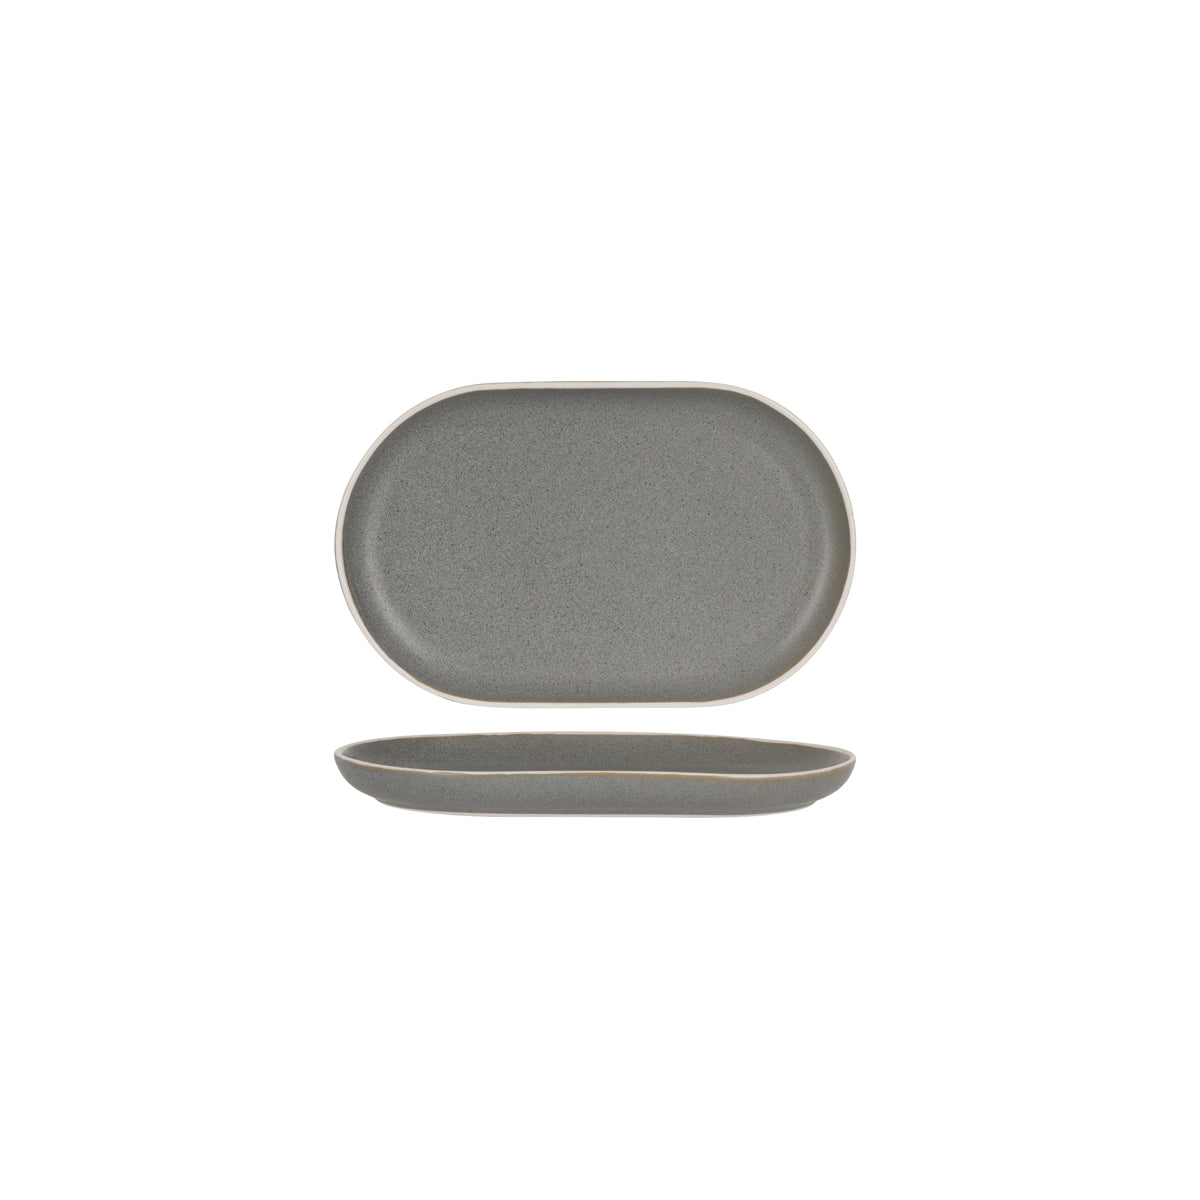 908020 Tablekraft Urban Grey Oval Plate 250x160mm Tomkin Australia Hospitality Supplies